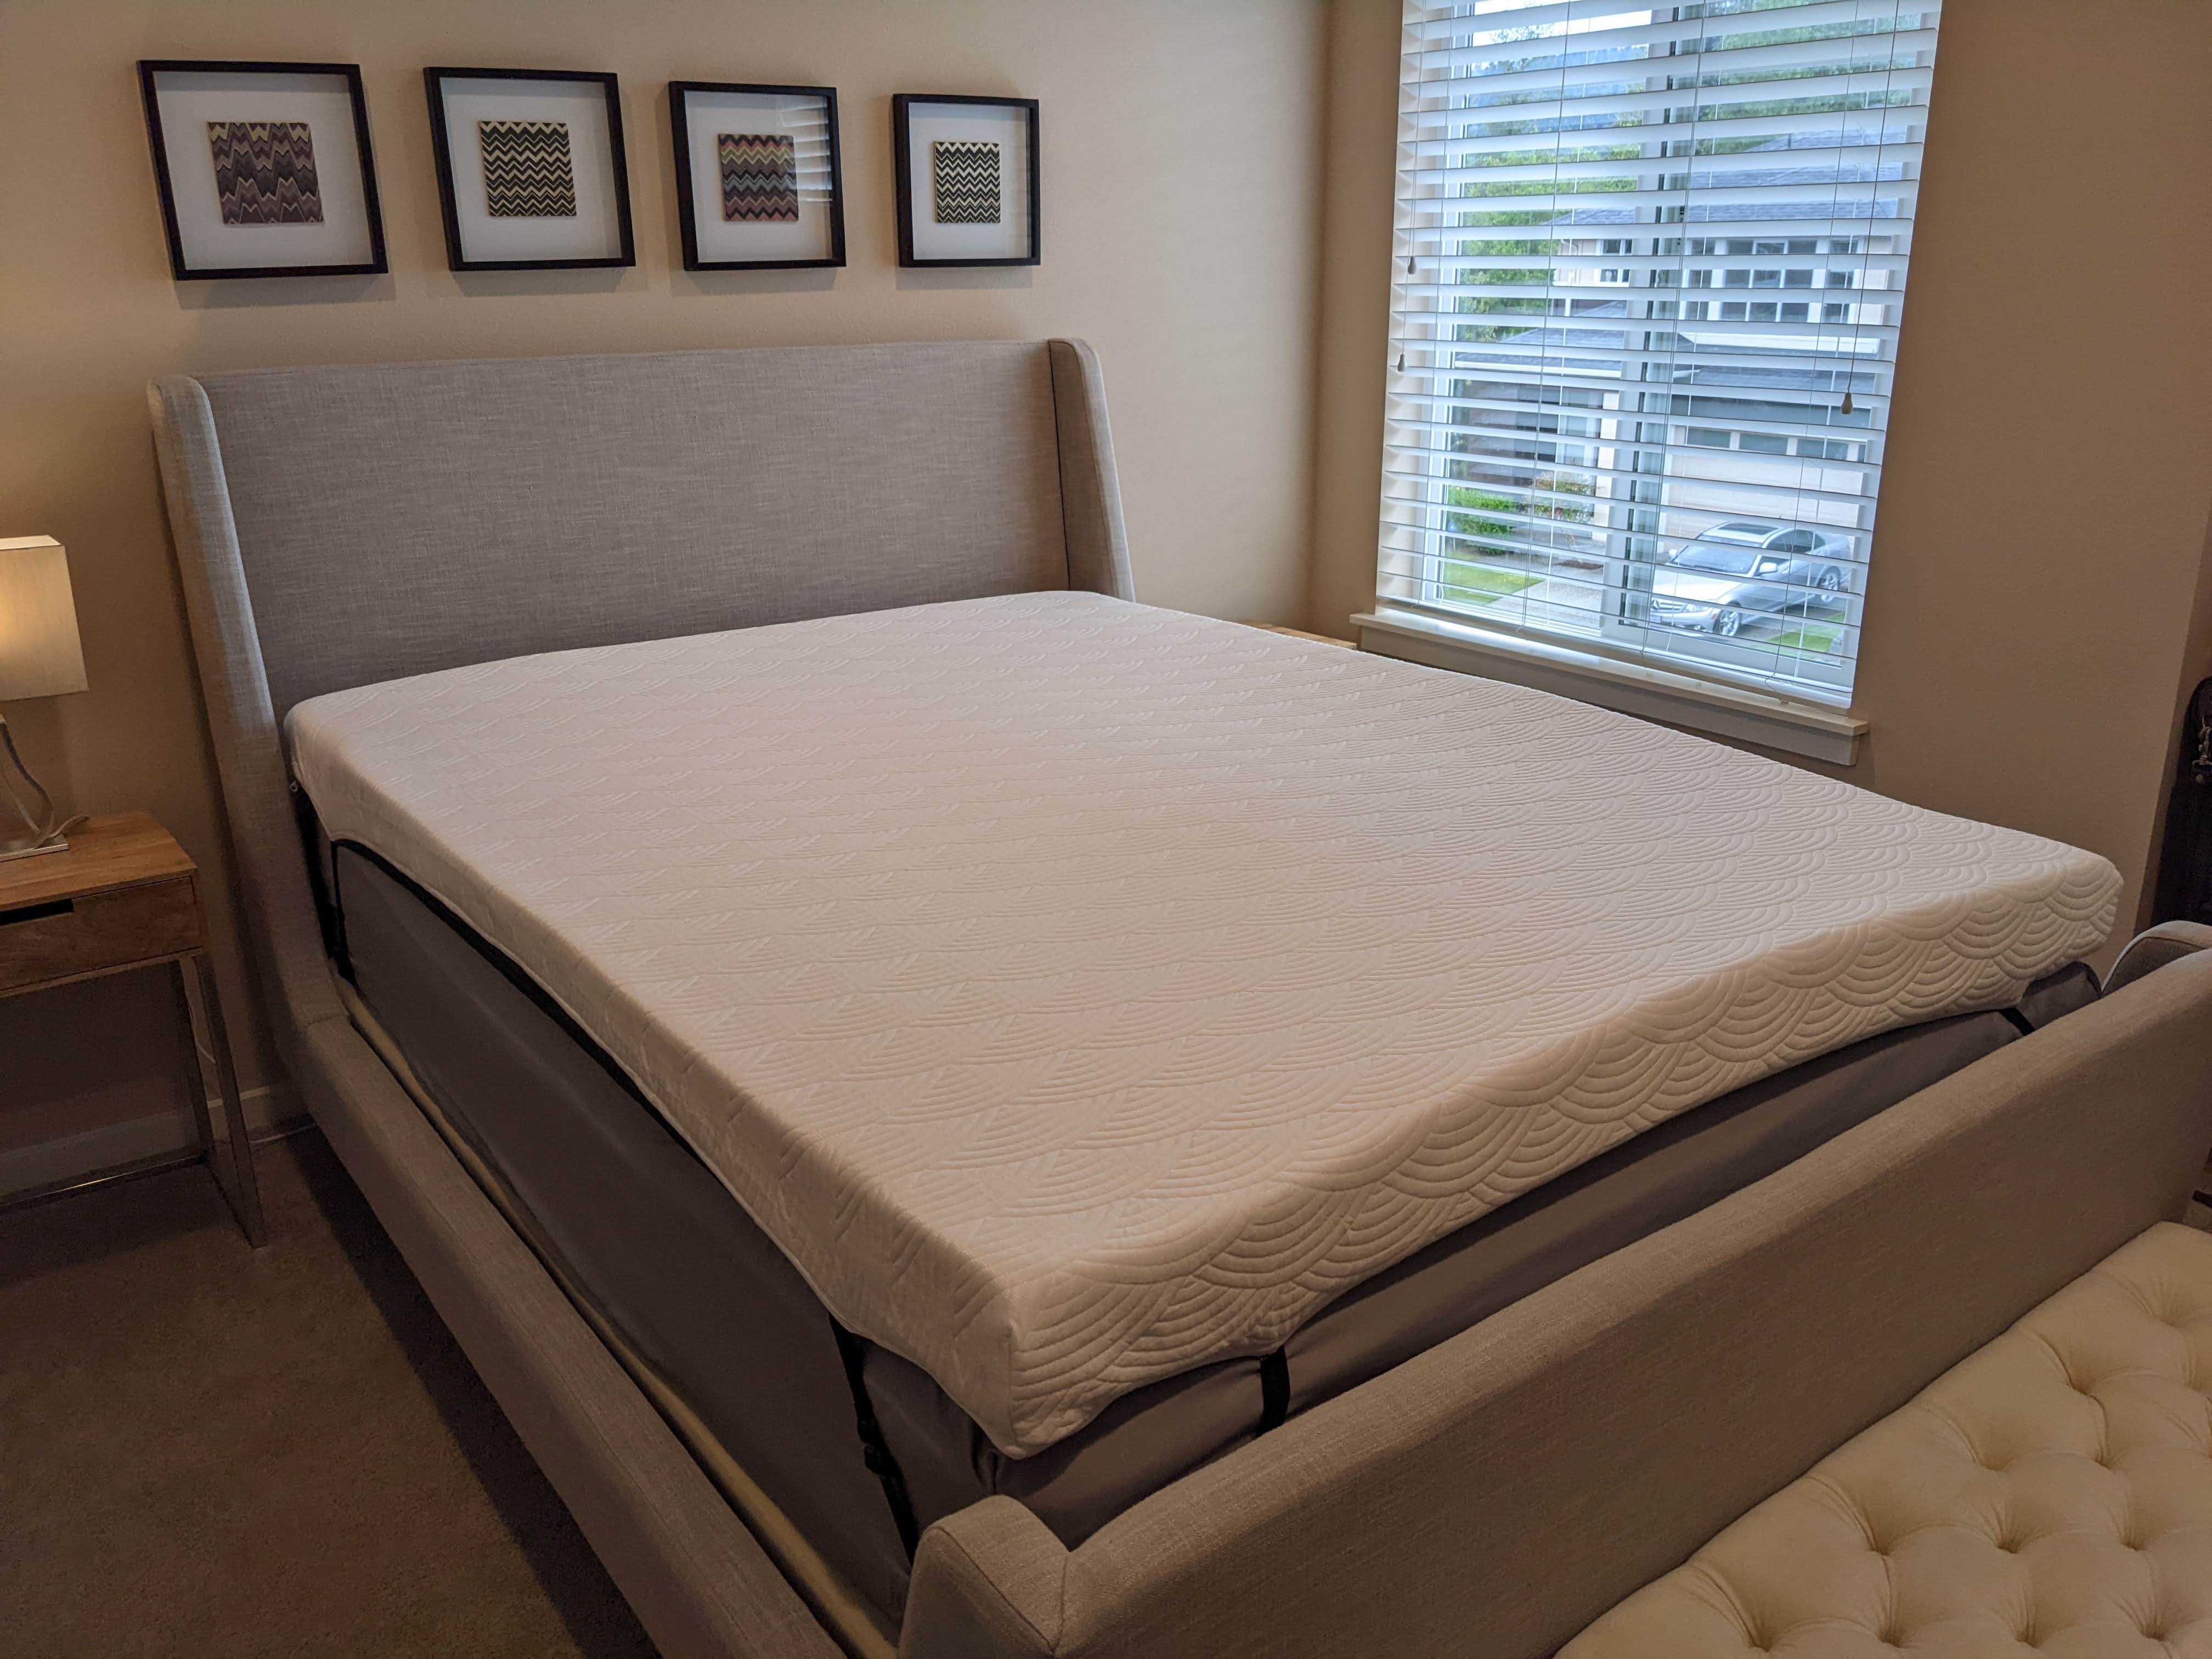 active cooling mattress pad feel cooler